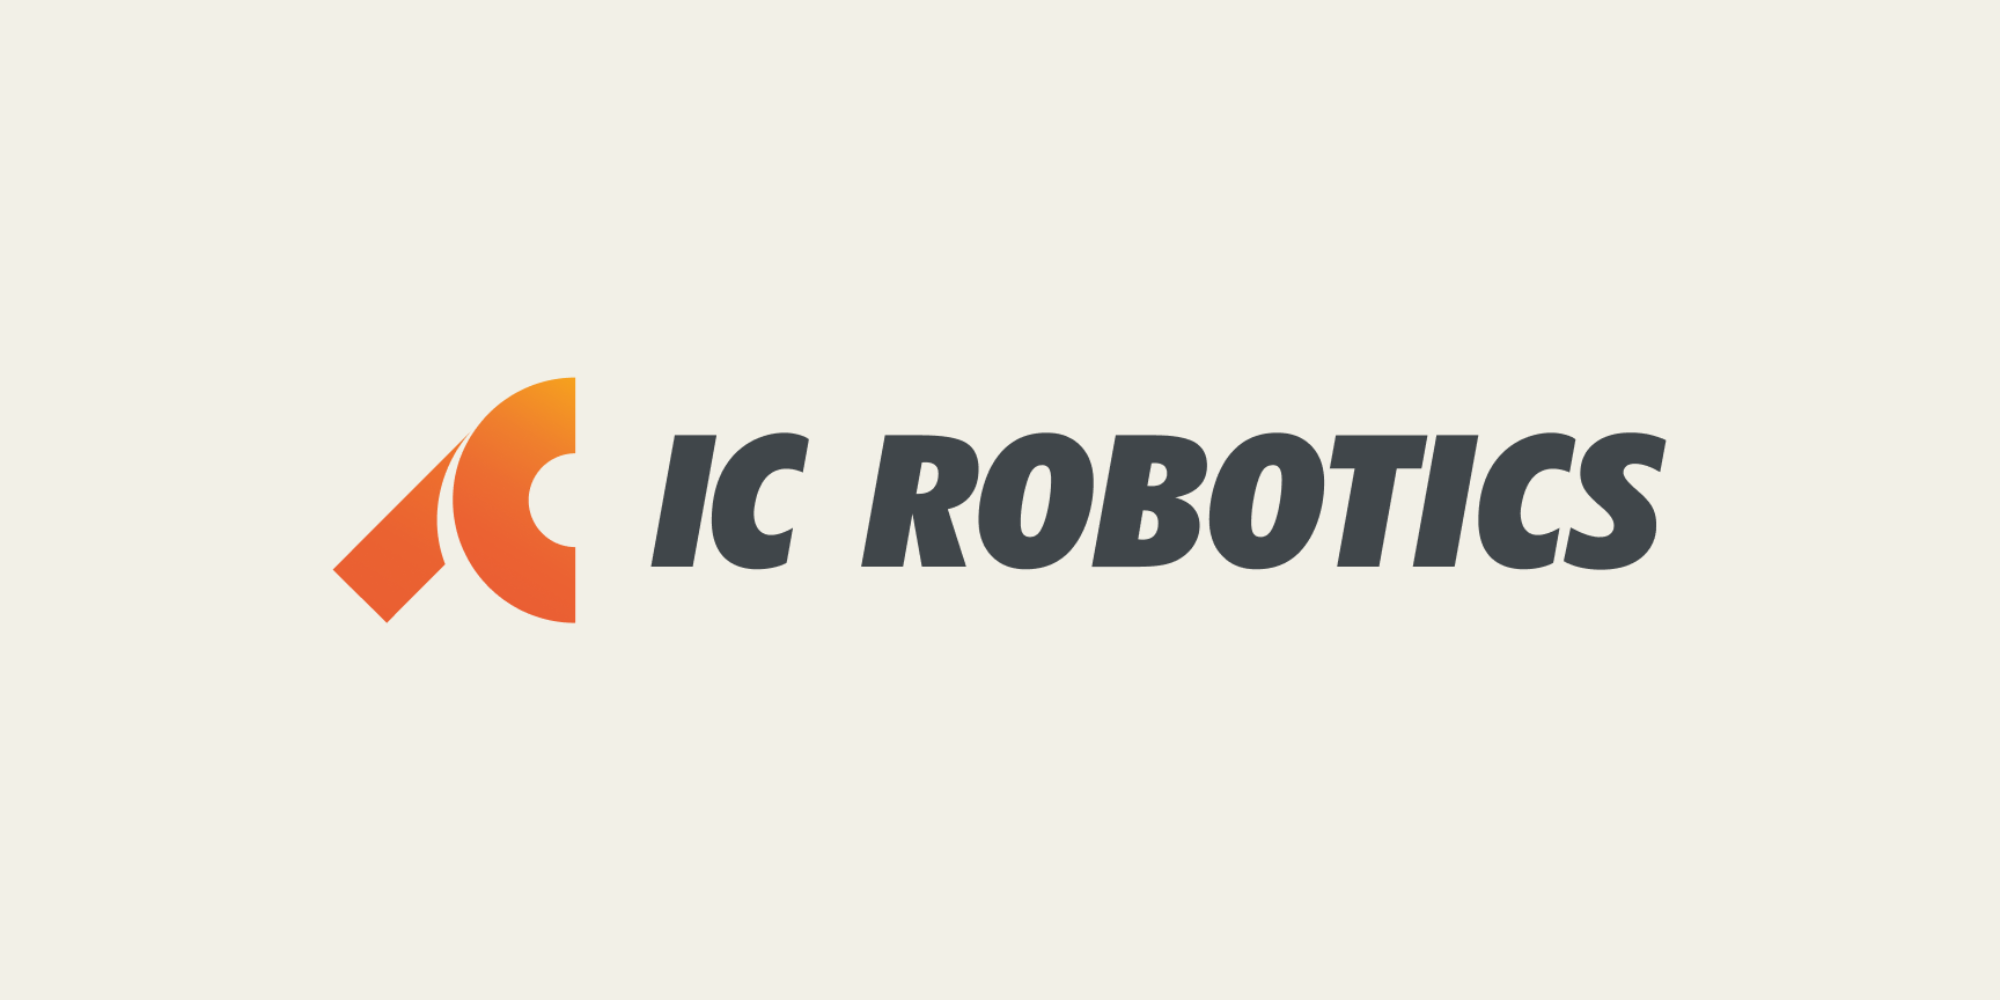 (c) Icrobotics.com